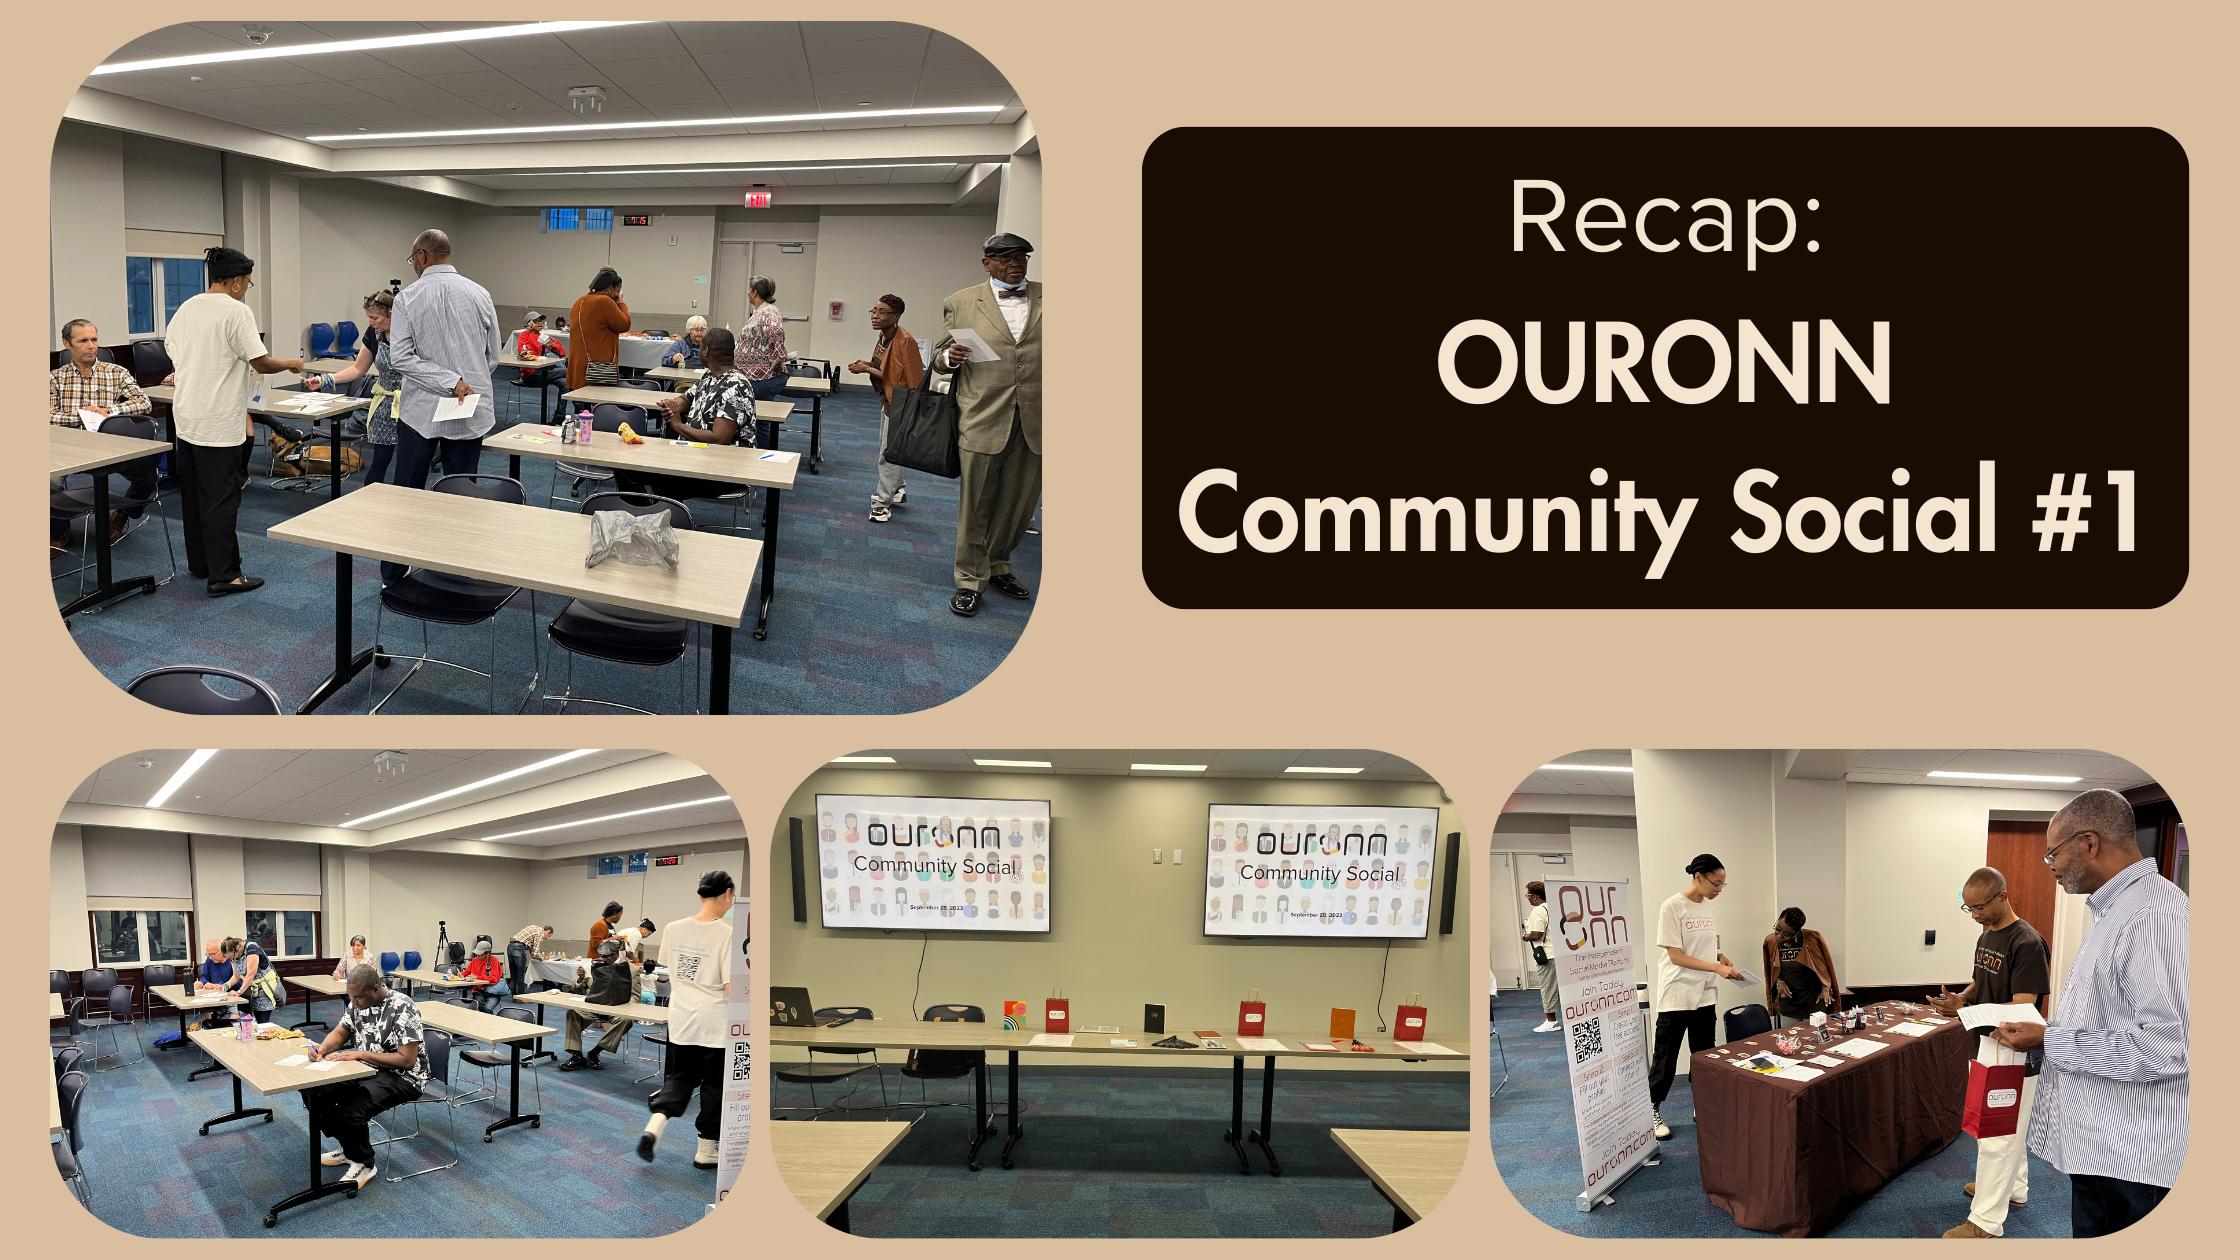 "Recap: OURONN Community Social #1" Cover Image